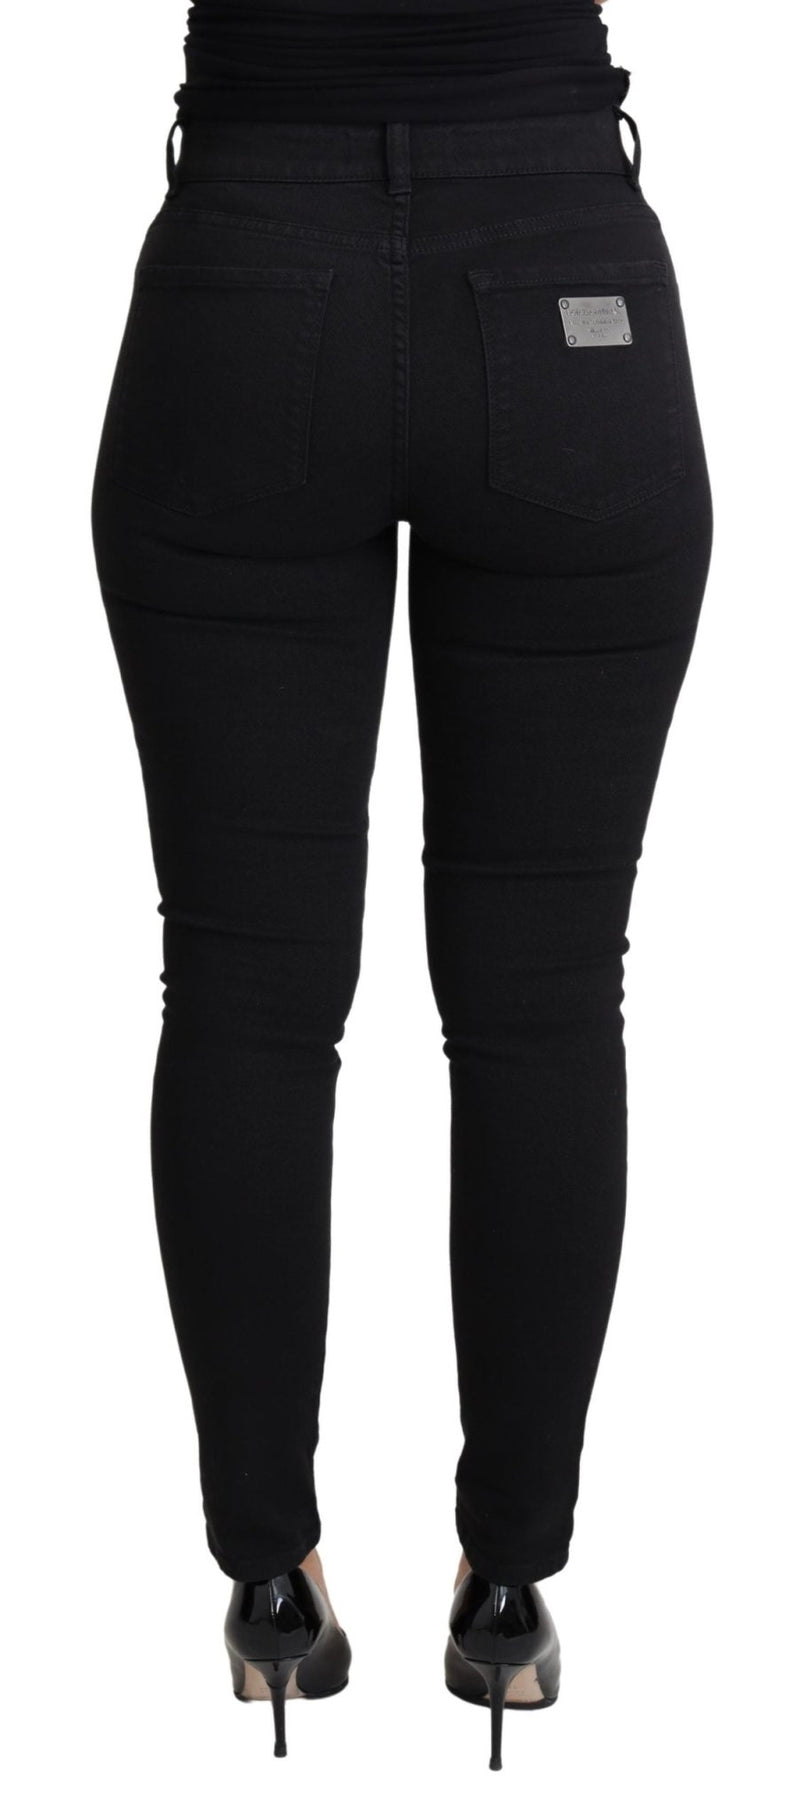 Black Skinny Denim Trouser Cotton Stretch Jeans - Avaz Shop